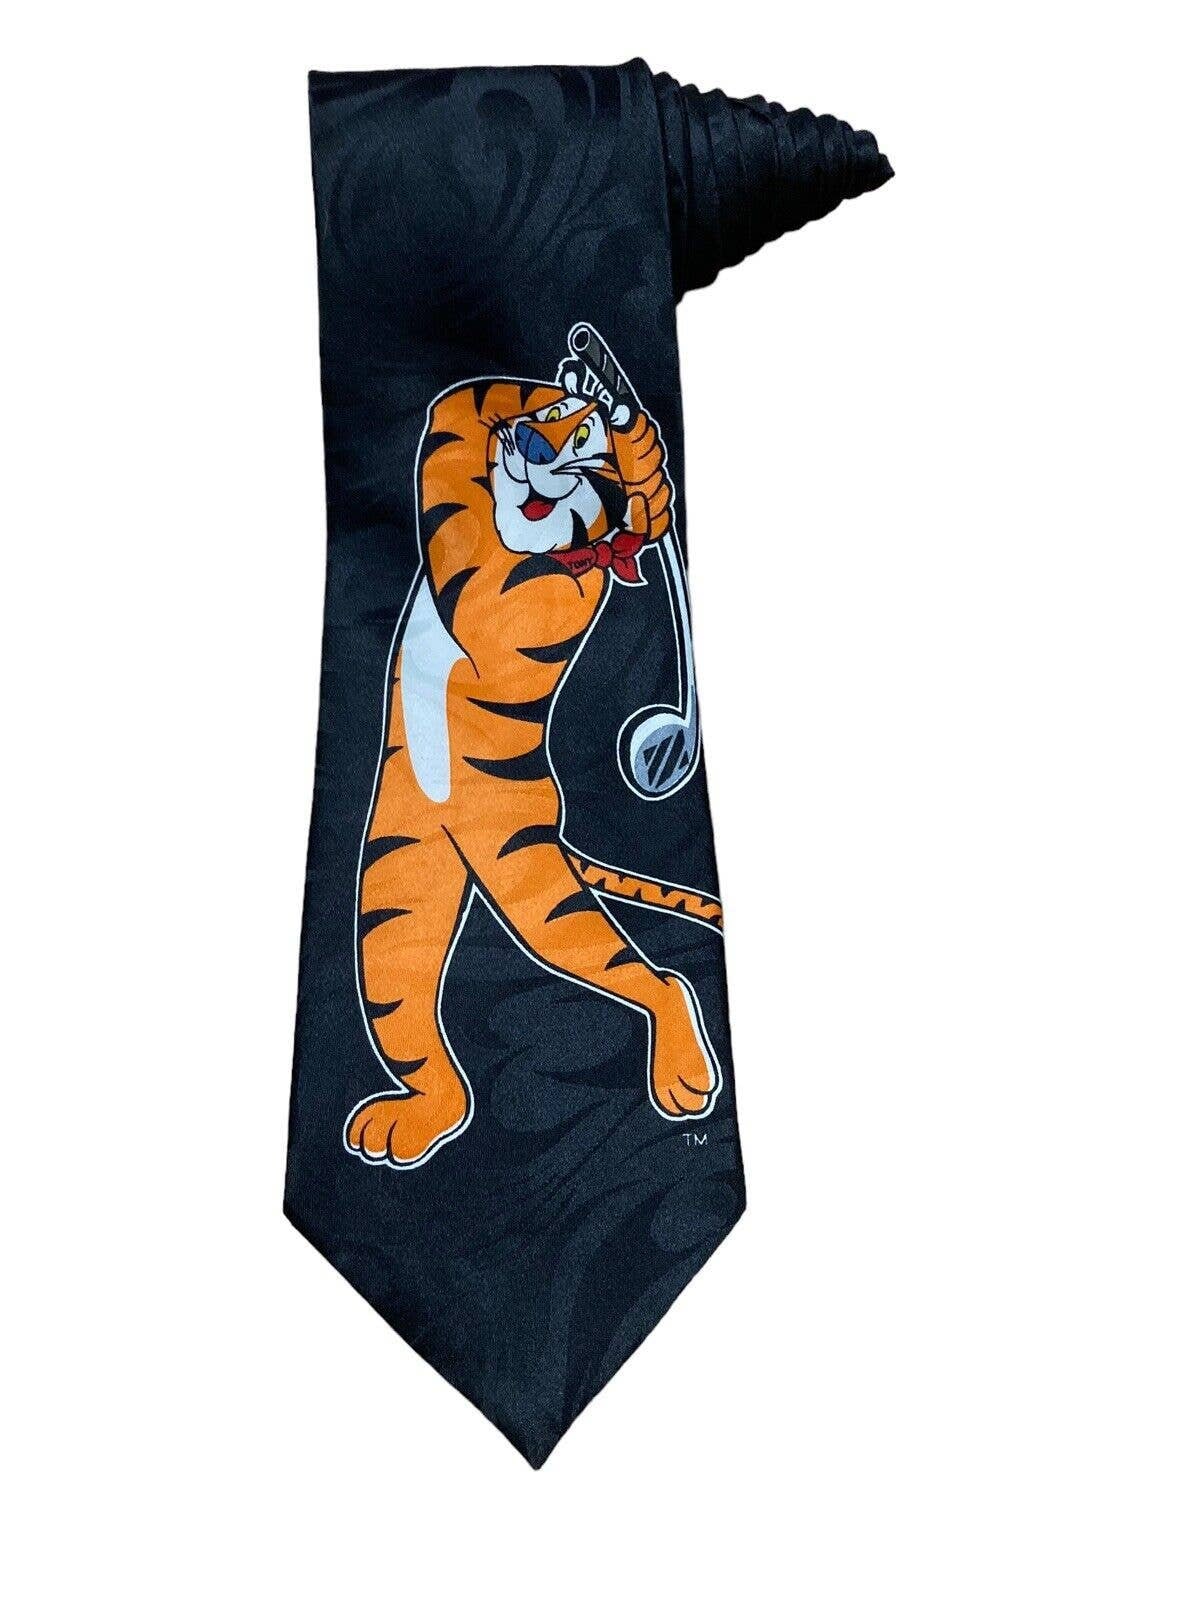 Kellogg’s Frosted Flakes Tony The Tiger Golfing Mascot Vintage Novelty Tiger Golfing Mascot Vintage Novelty Necktie